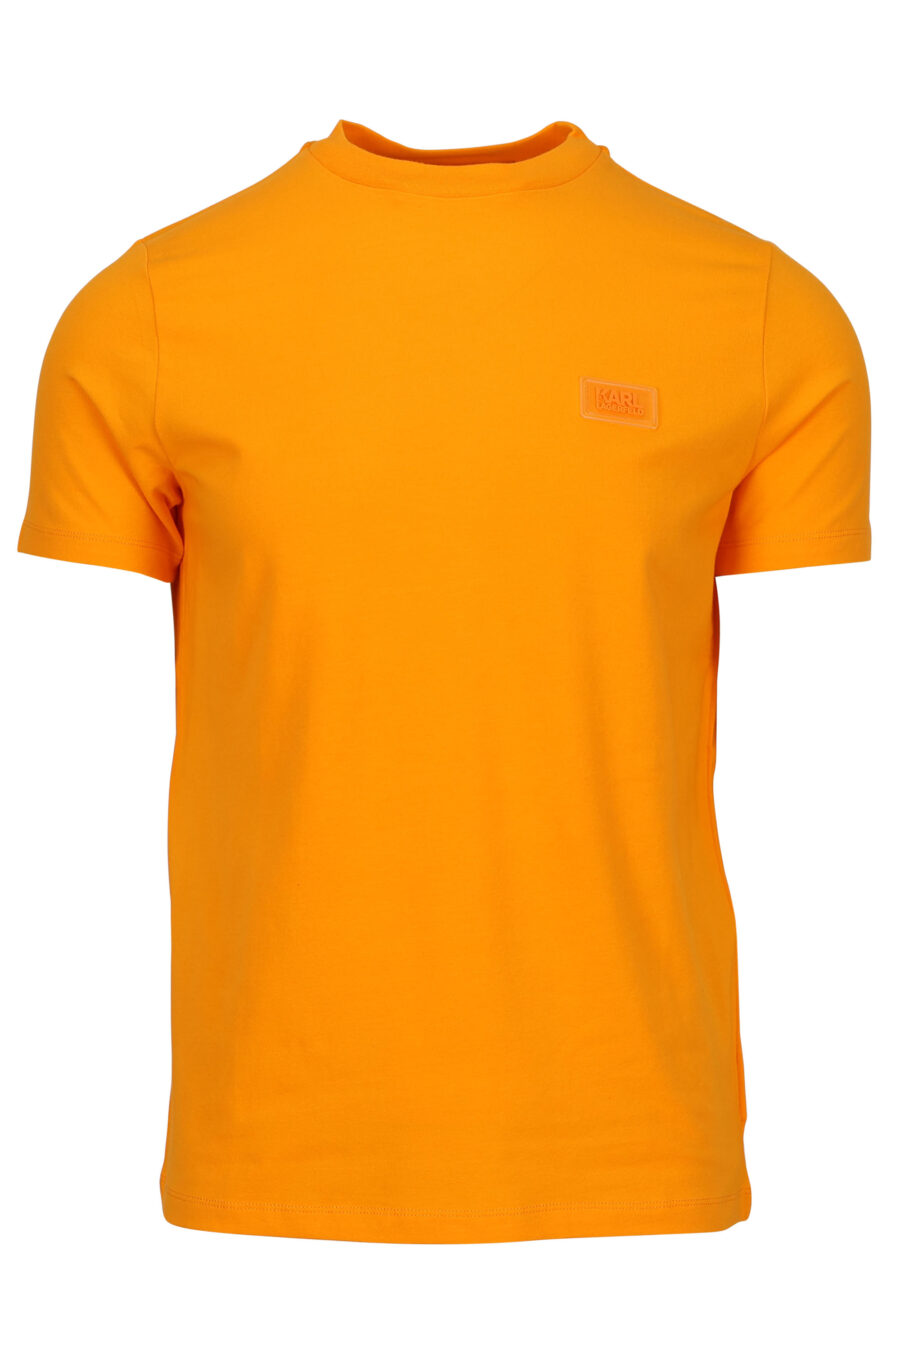 Camiseta naranja con minilogo placa - 4062226958912